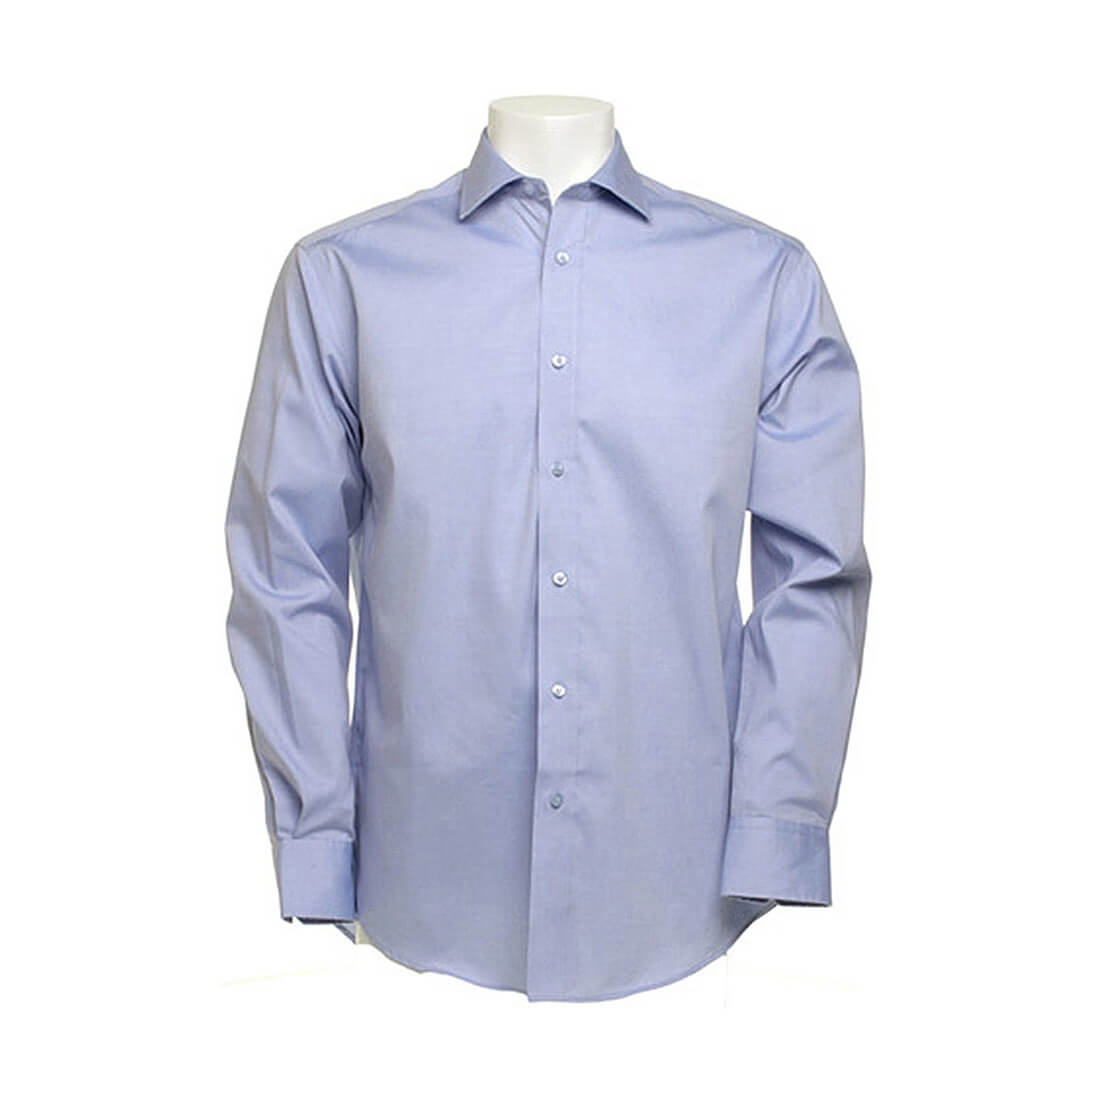 Executive Premium Oxford Shirt LS - Safetywear